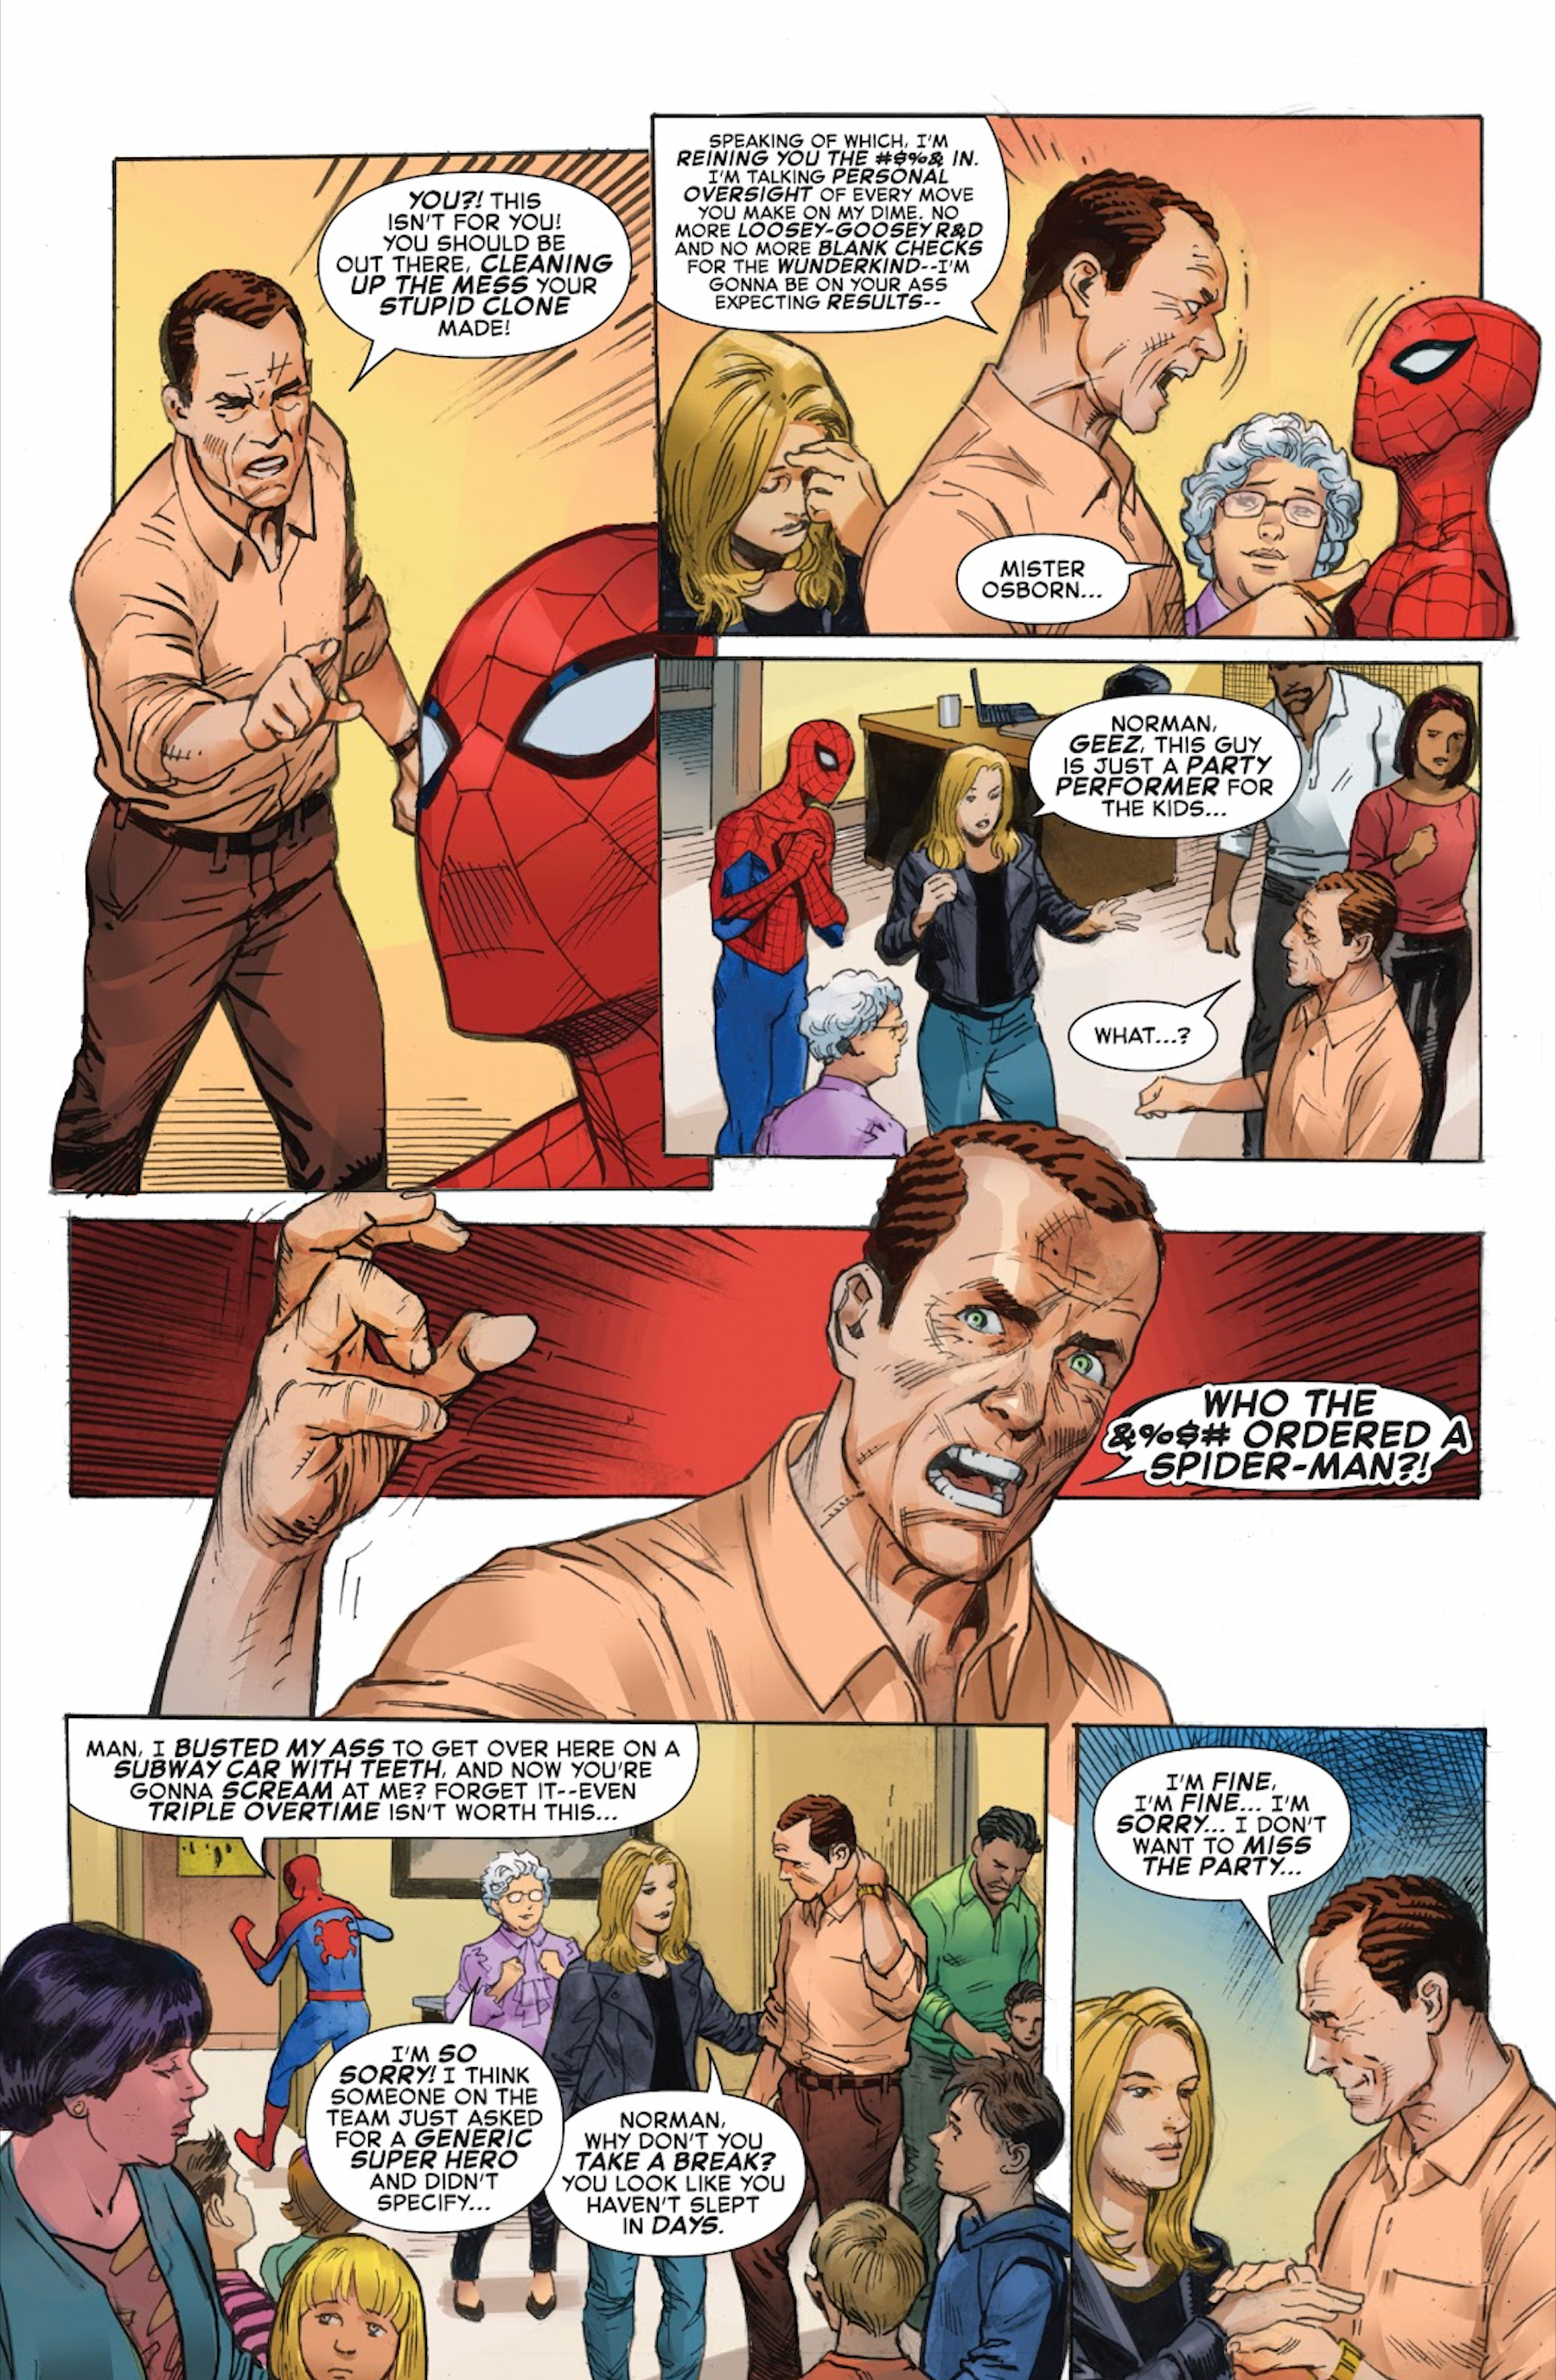 Norman Osborn yells at a birthday party Spider-Man